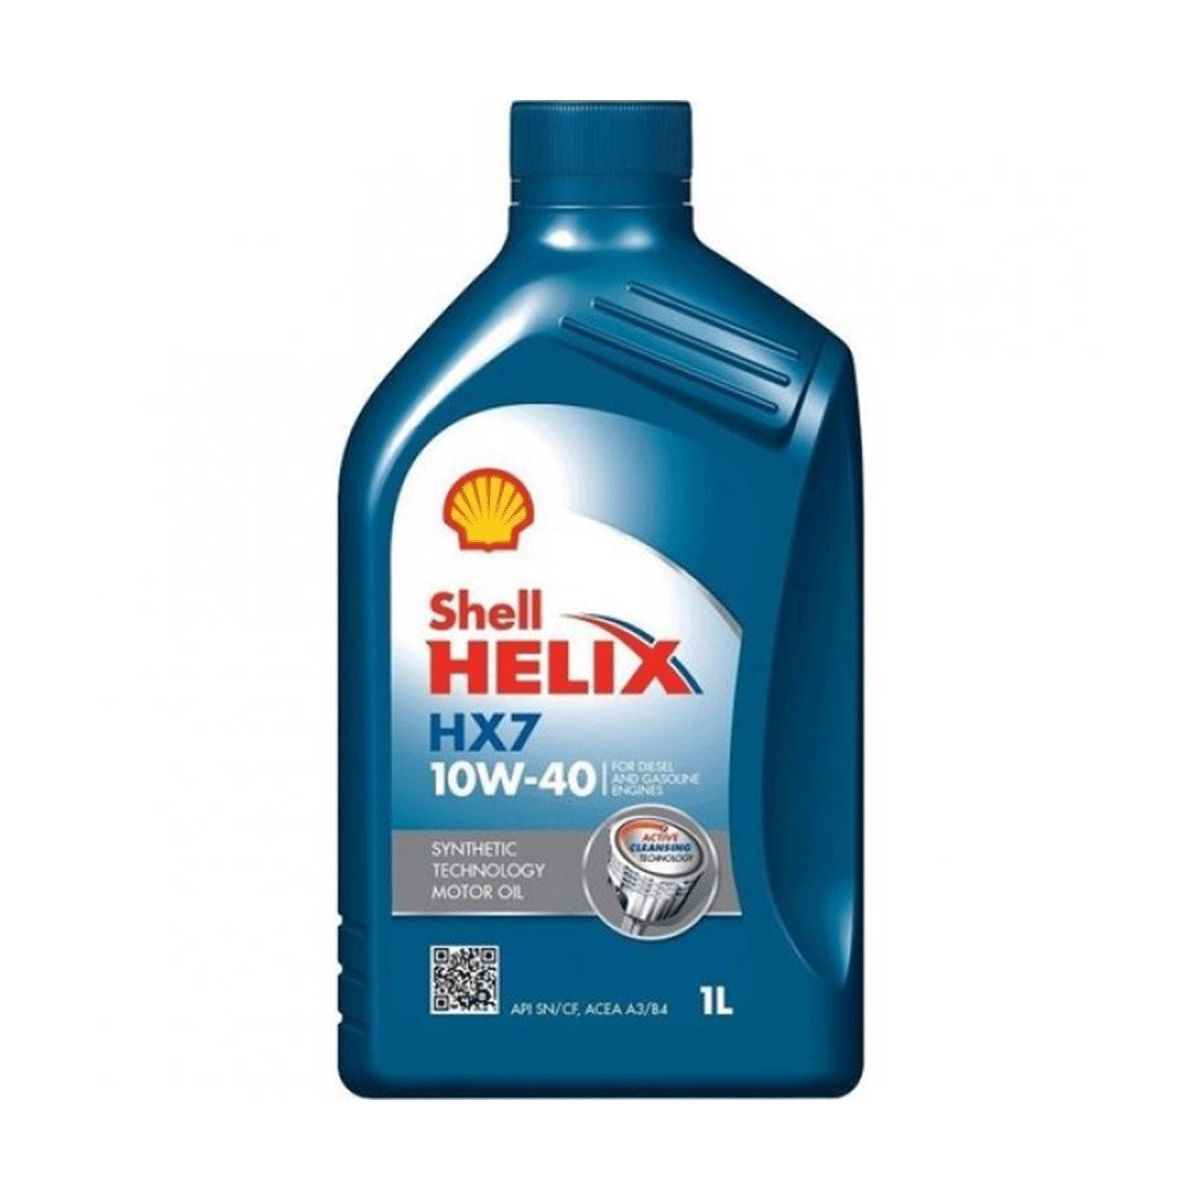 Shell Adblue 10 Litre (Üretim Yılı: 2023) Fiyatı